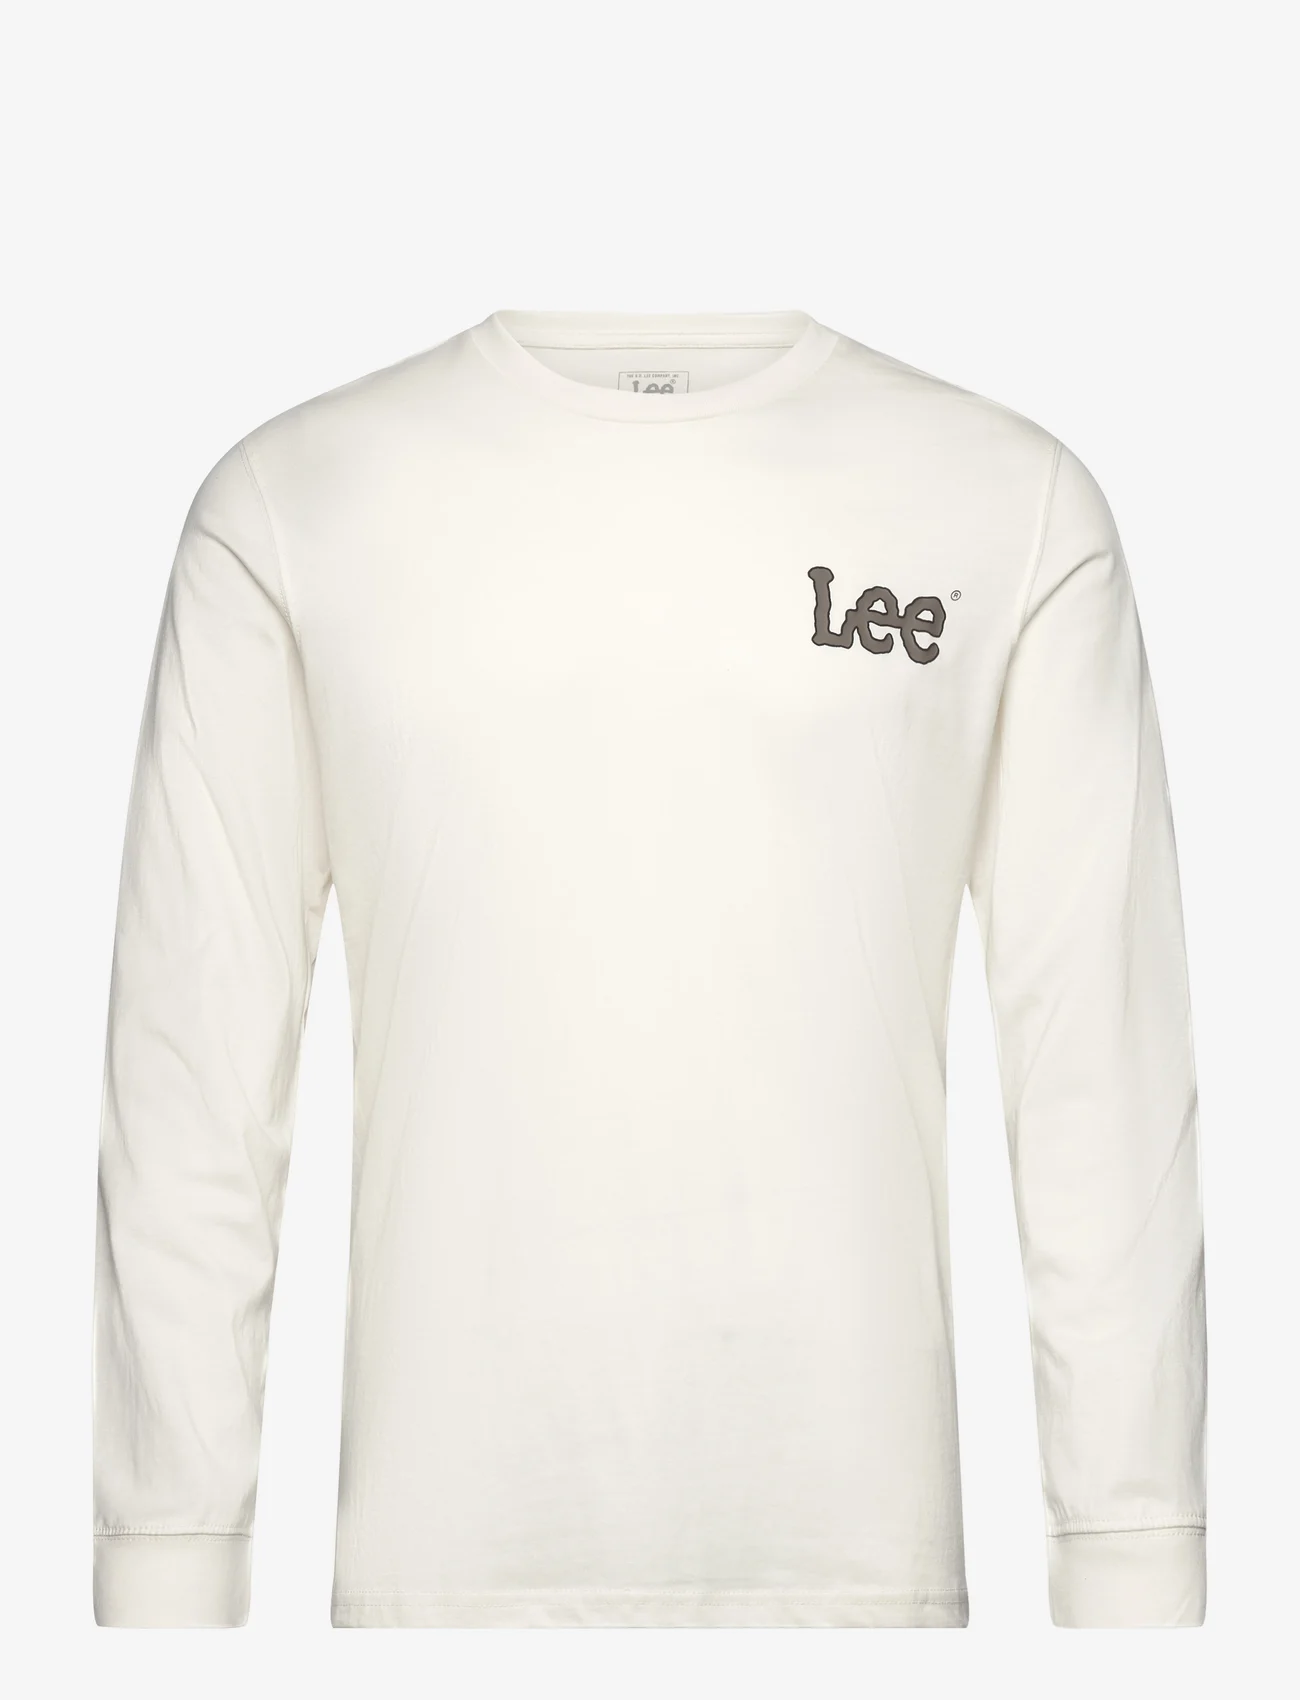 Lee Jeans - ESSENTIAL LS TEE - basic t-shirts - ecru - 0